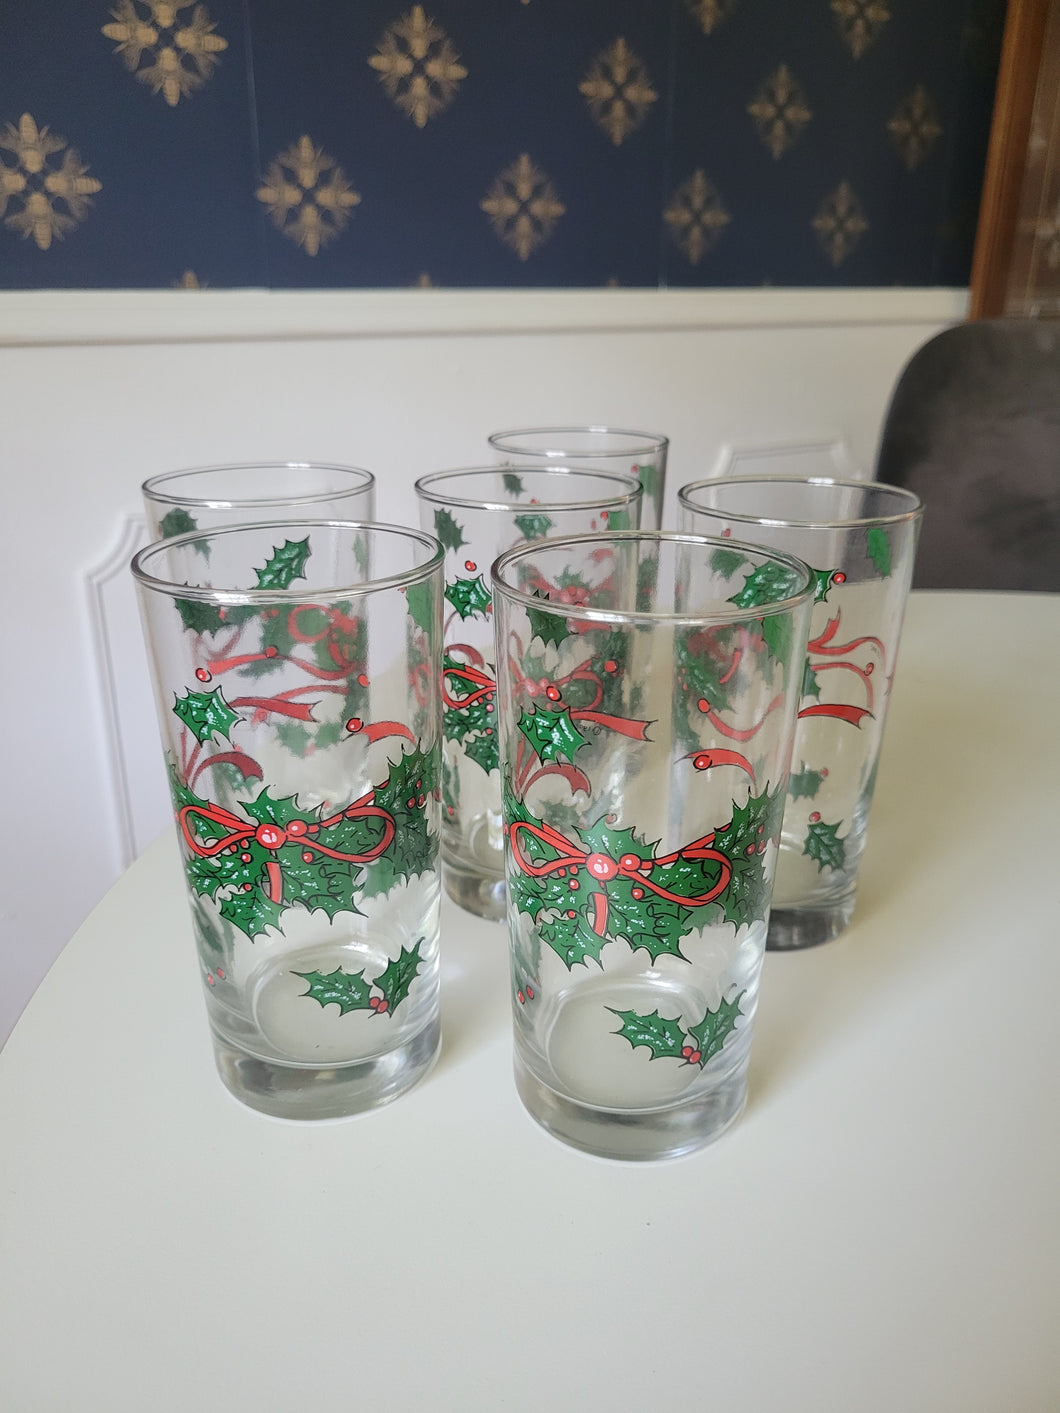 Holly Christmas Glasses (set of 6)